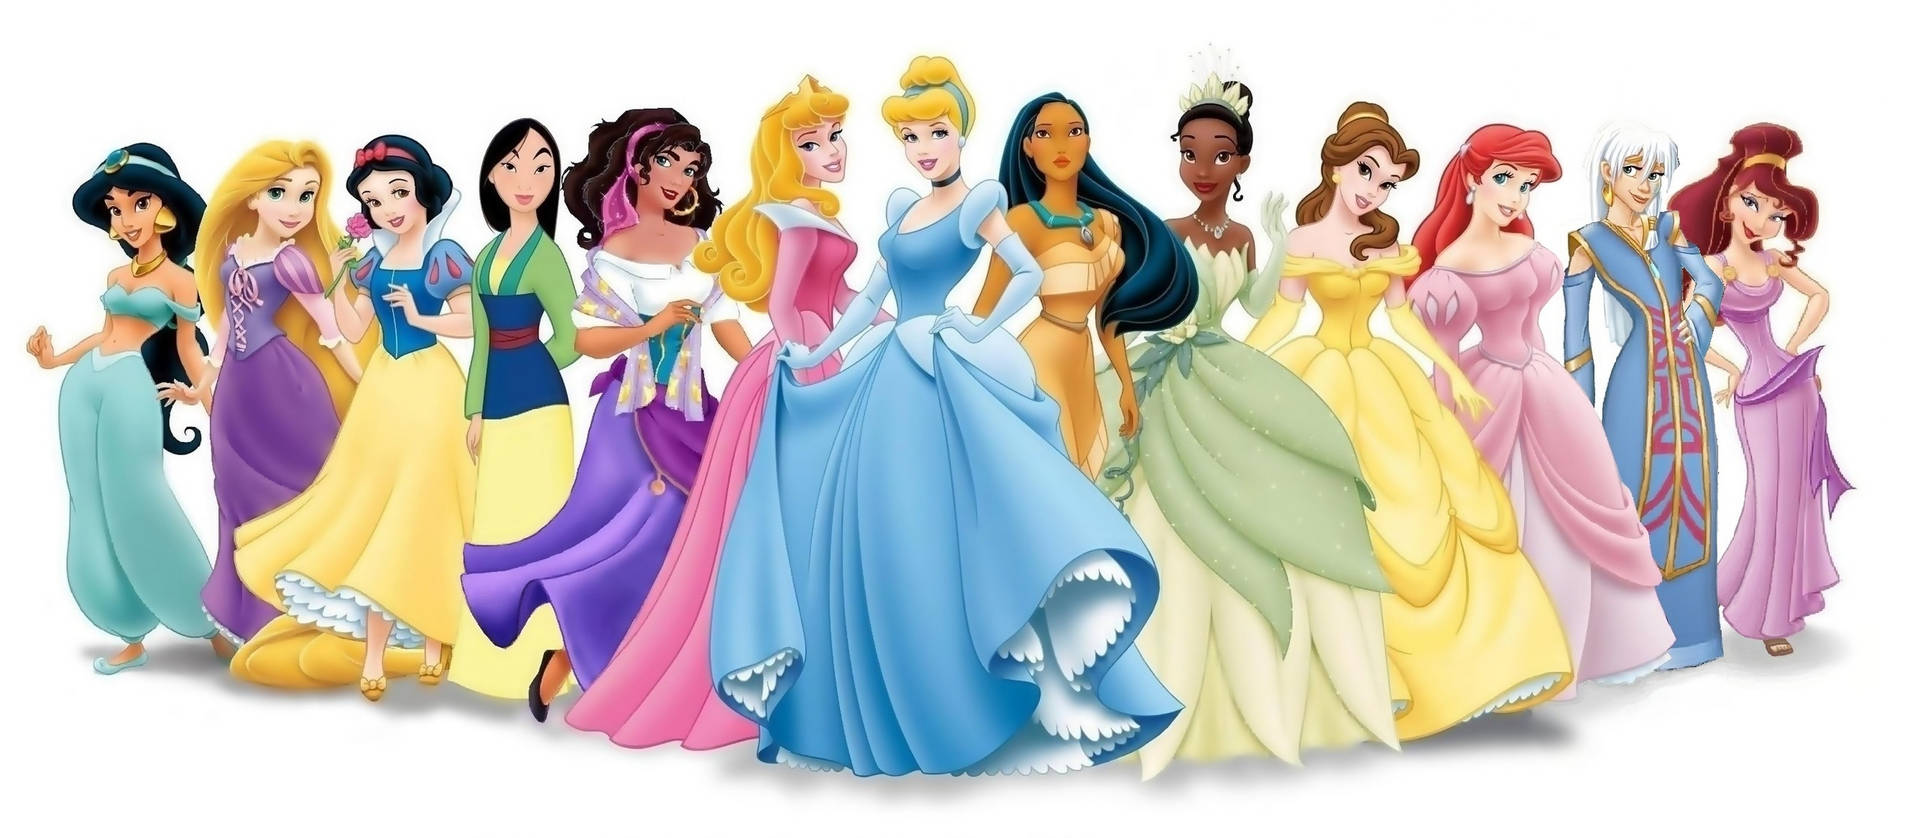 Disney Princess 2560X1117 Wallpaper and Background Image